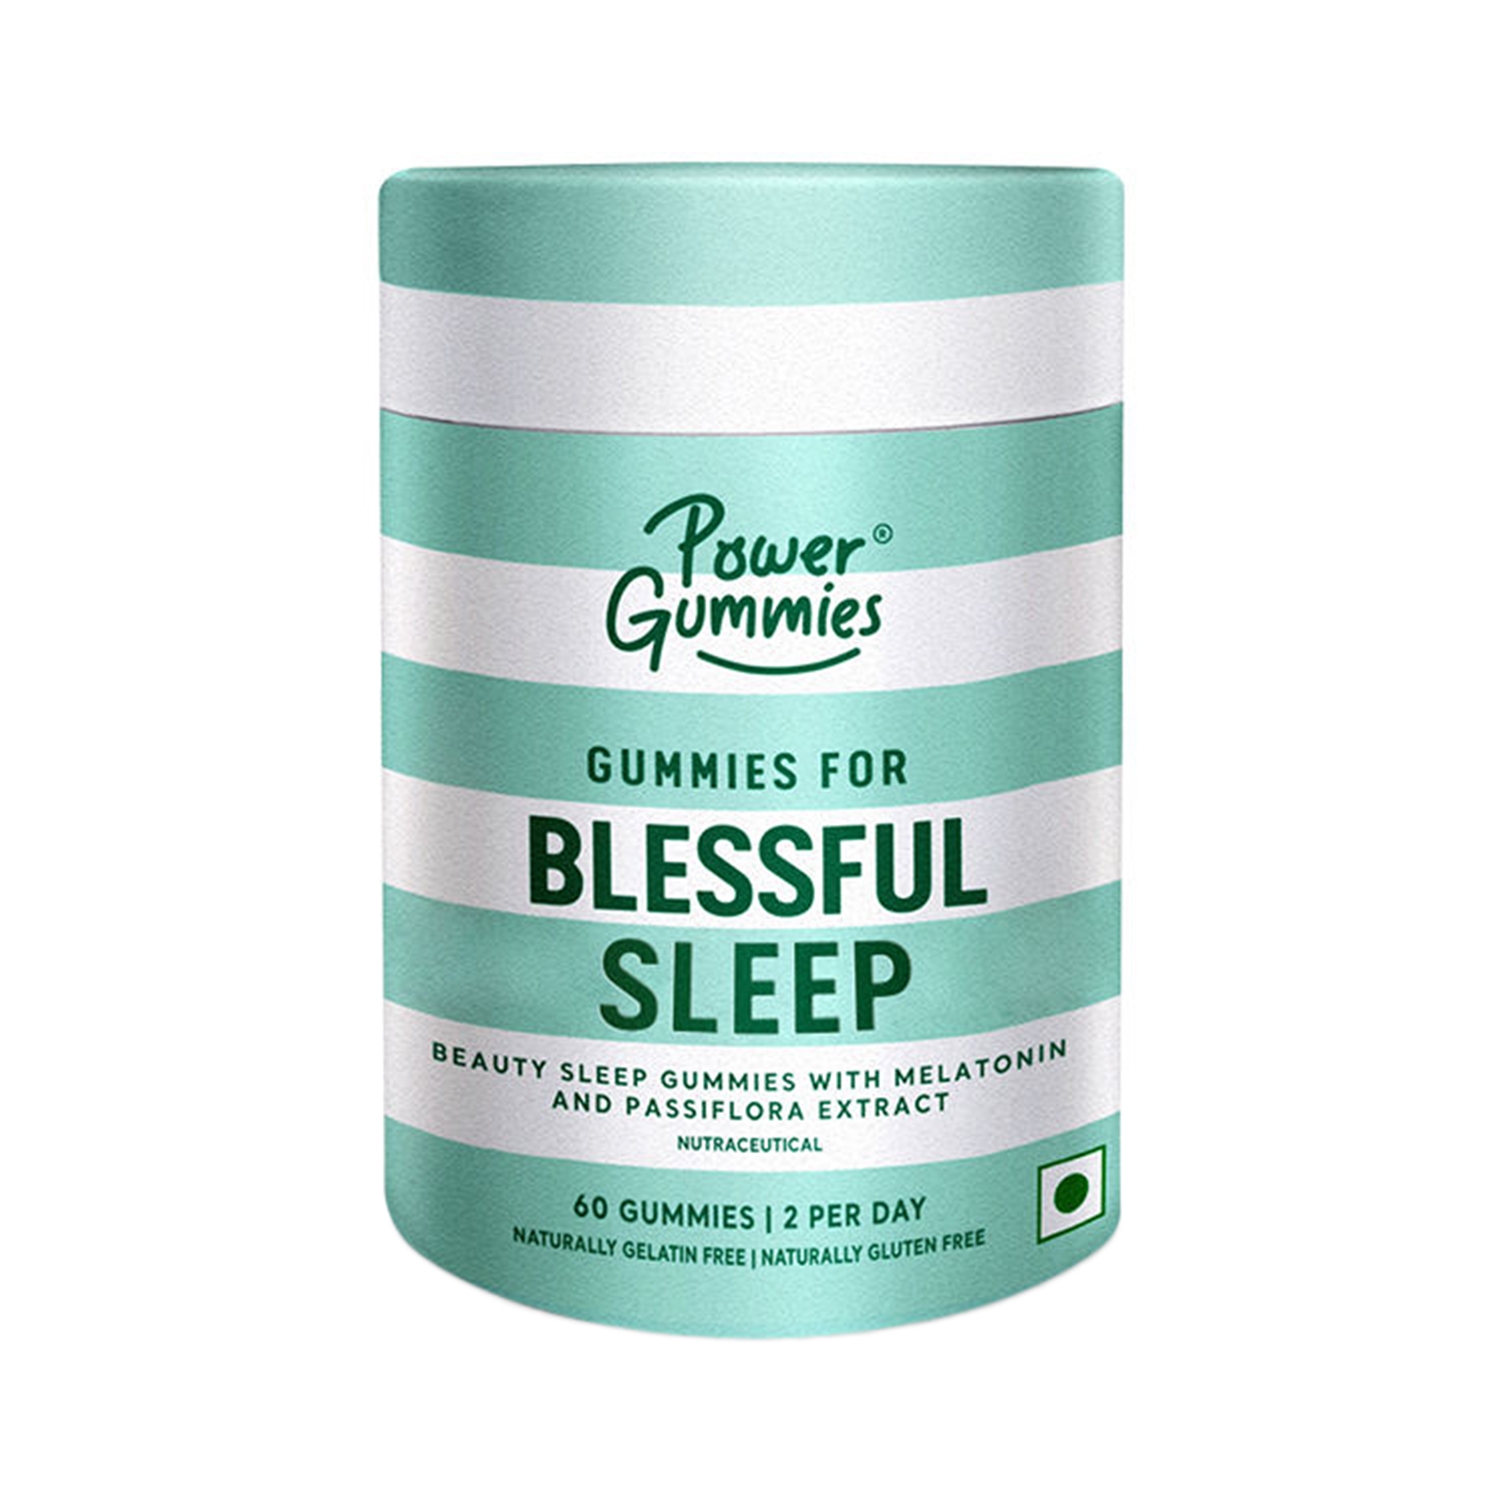 Power Gummies | Power Gummies Blessful Sleep Gummies For Beauty - Reduced Stress & Relaxed Mind - Melatonin - 60 Gummies (150g)